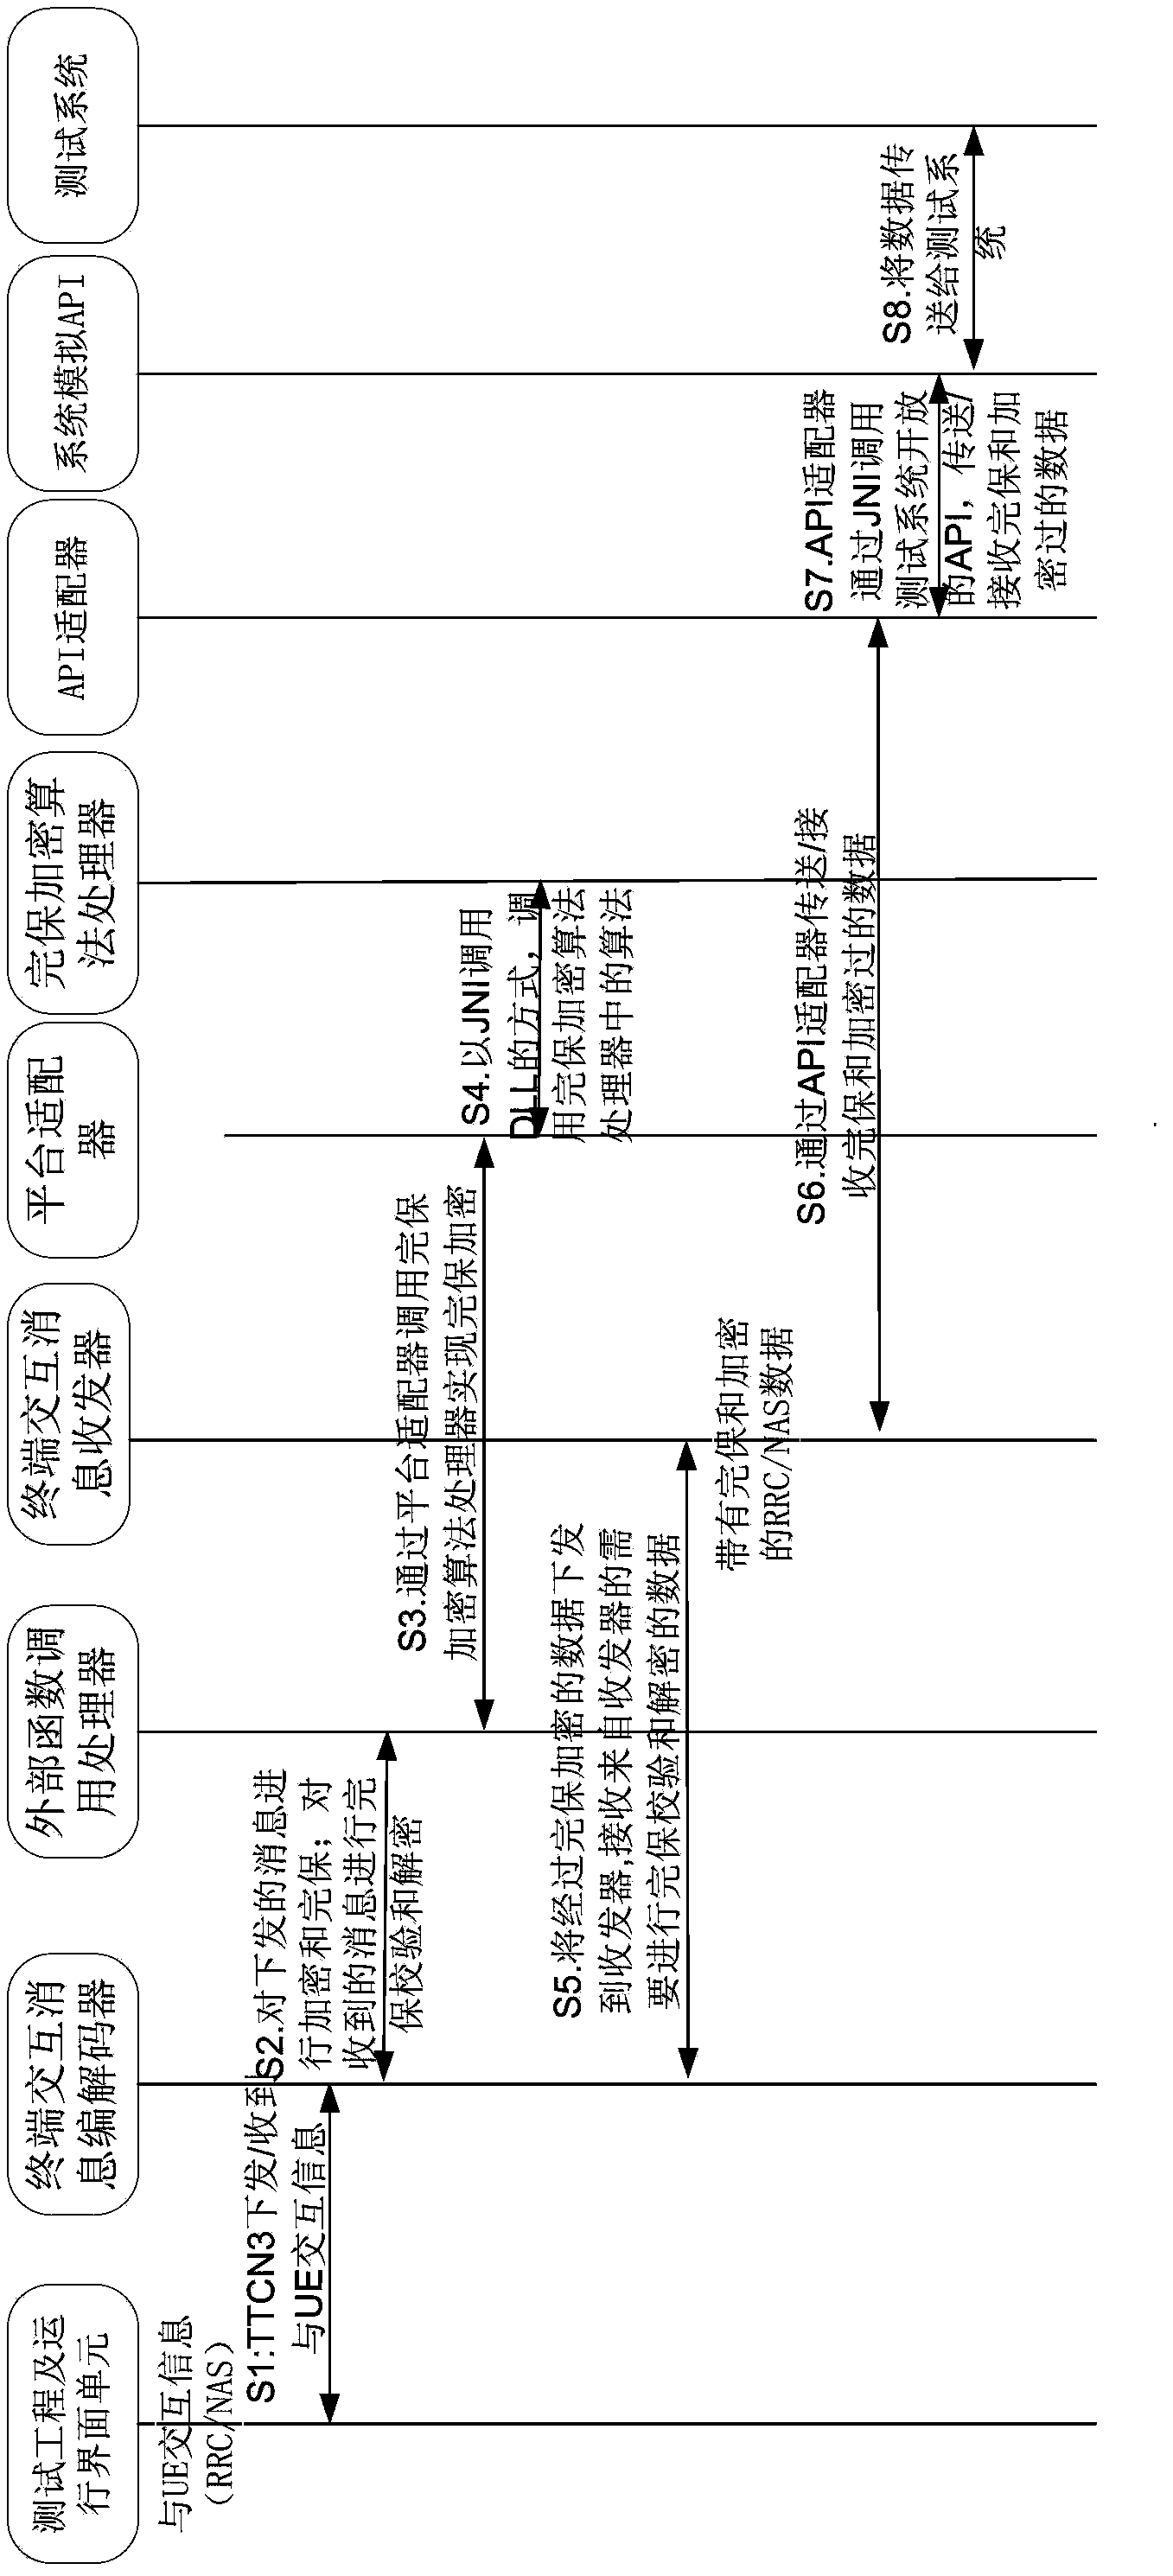 Conformance testing adapter based on TTCN-3